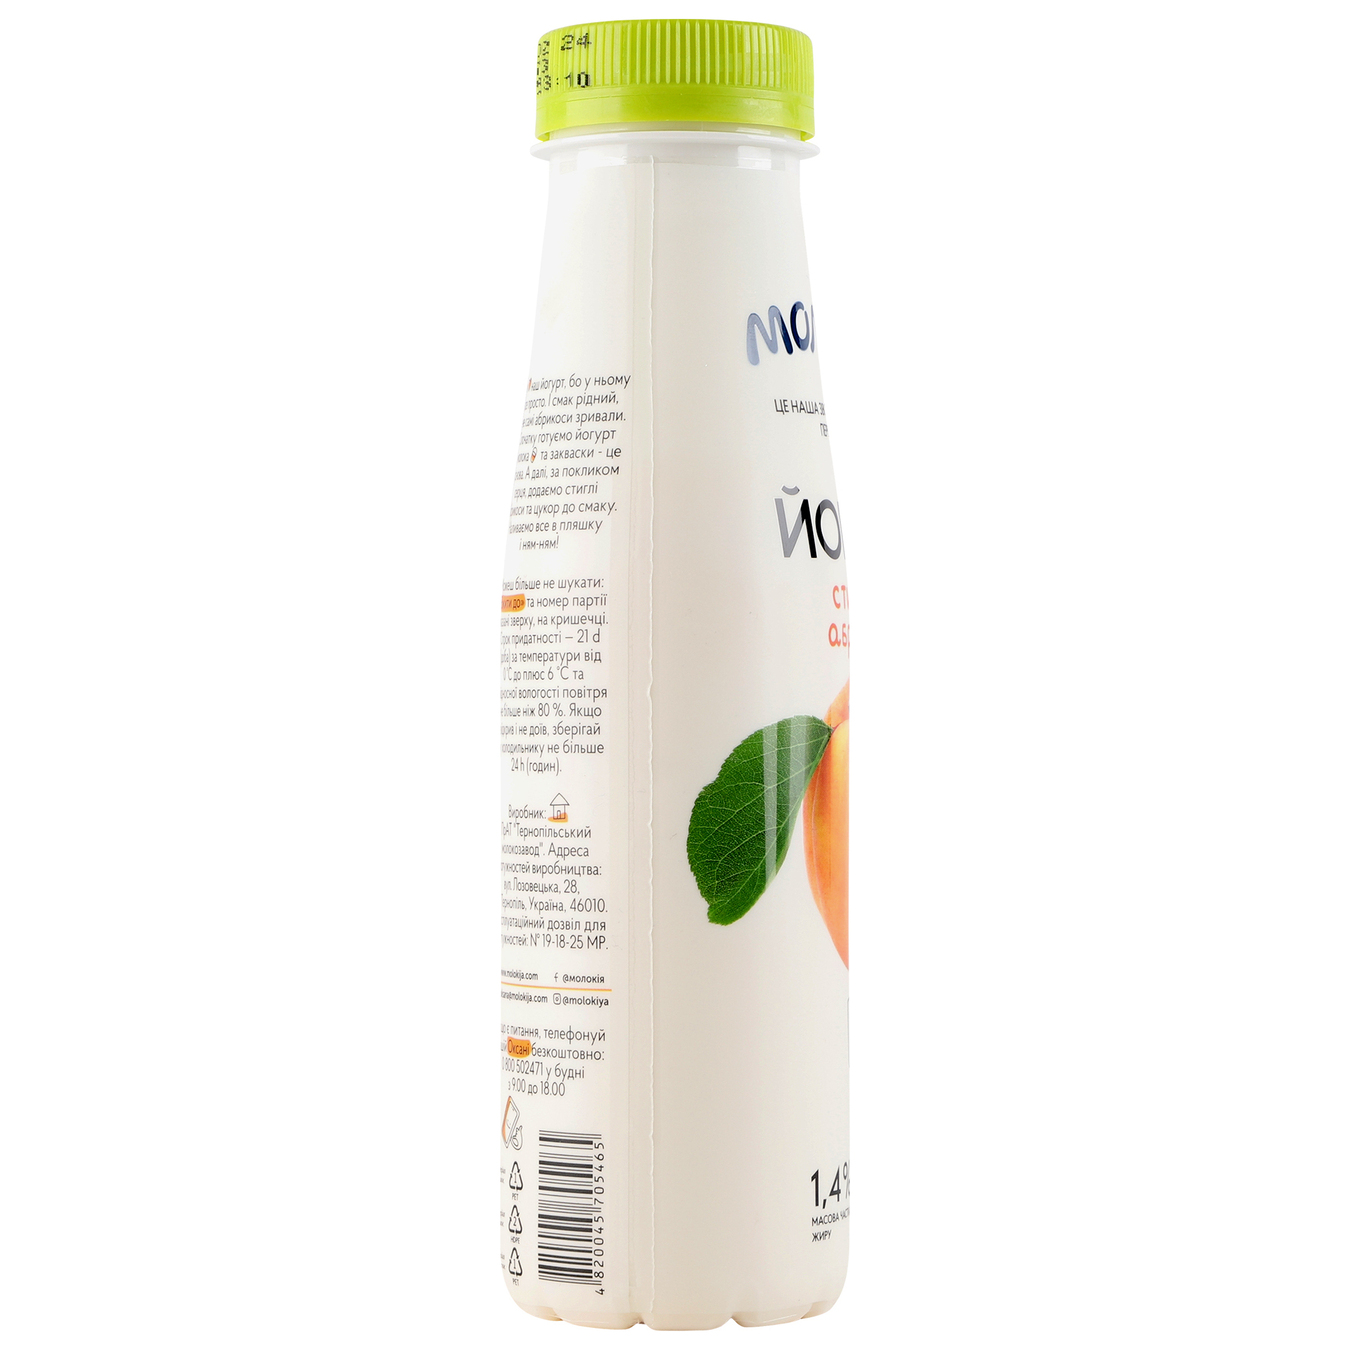 Yogurt Molokiya apricot bottle 1.4% 250g 3